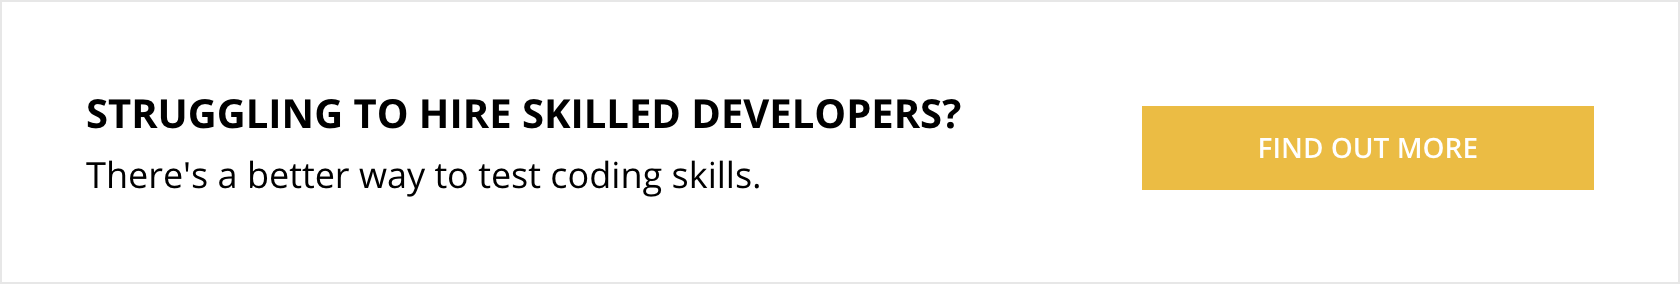 Test developers' skills